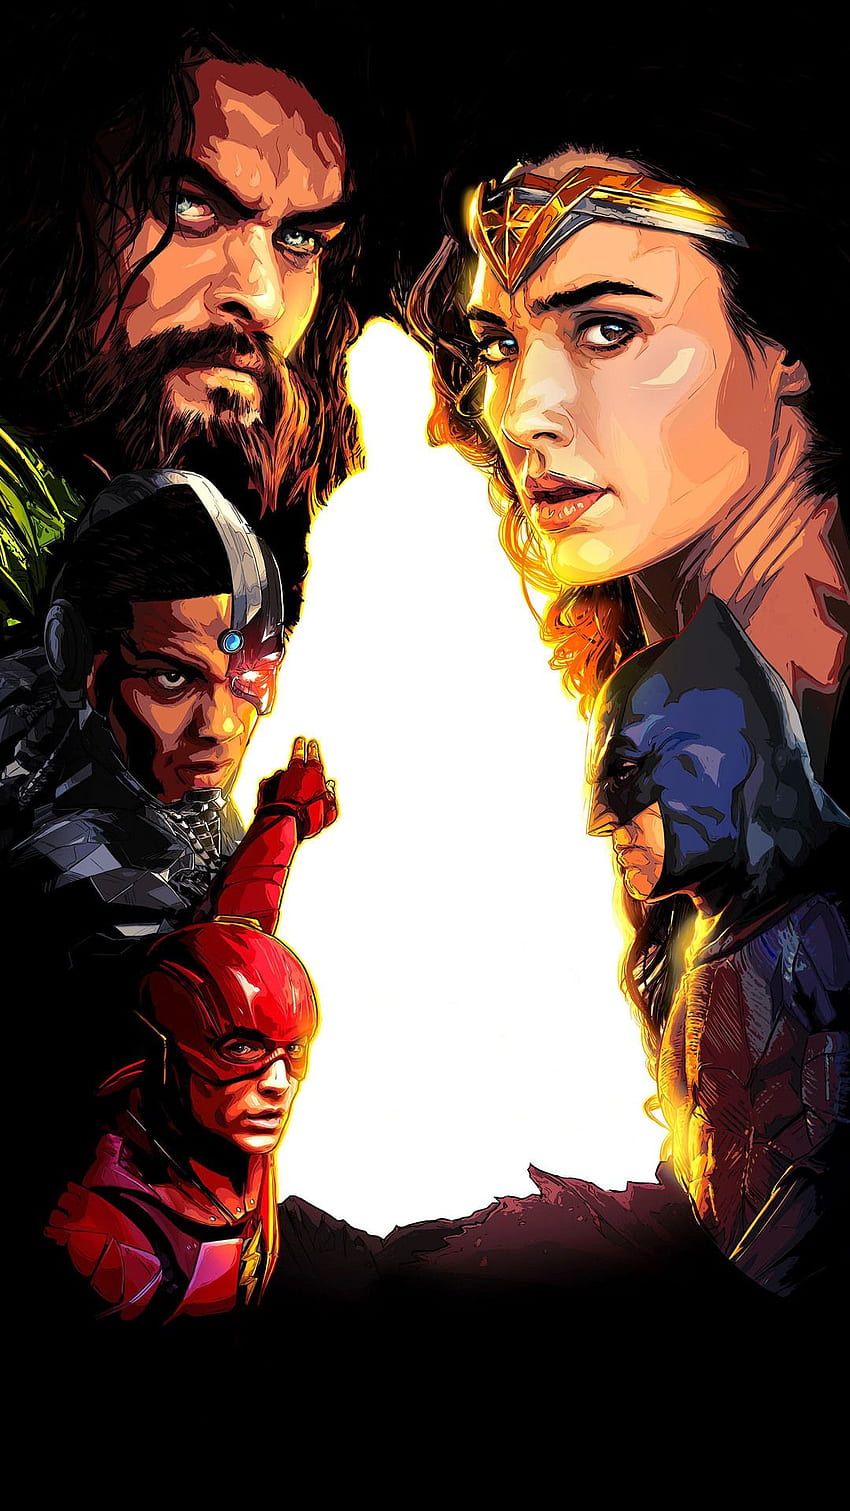 Justice League 2017 Nuevo póster iPhone 7, 6s, 6 Plus, Pixel fondo de pantalla del teléfono